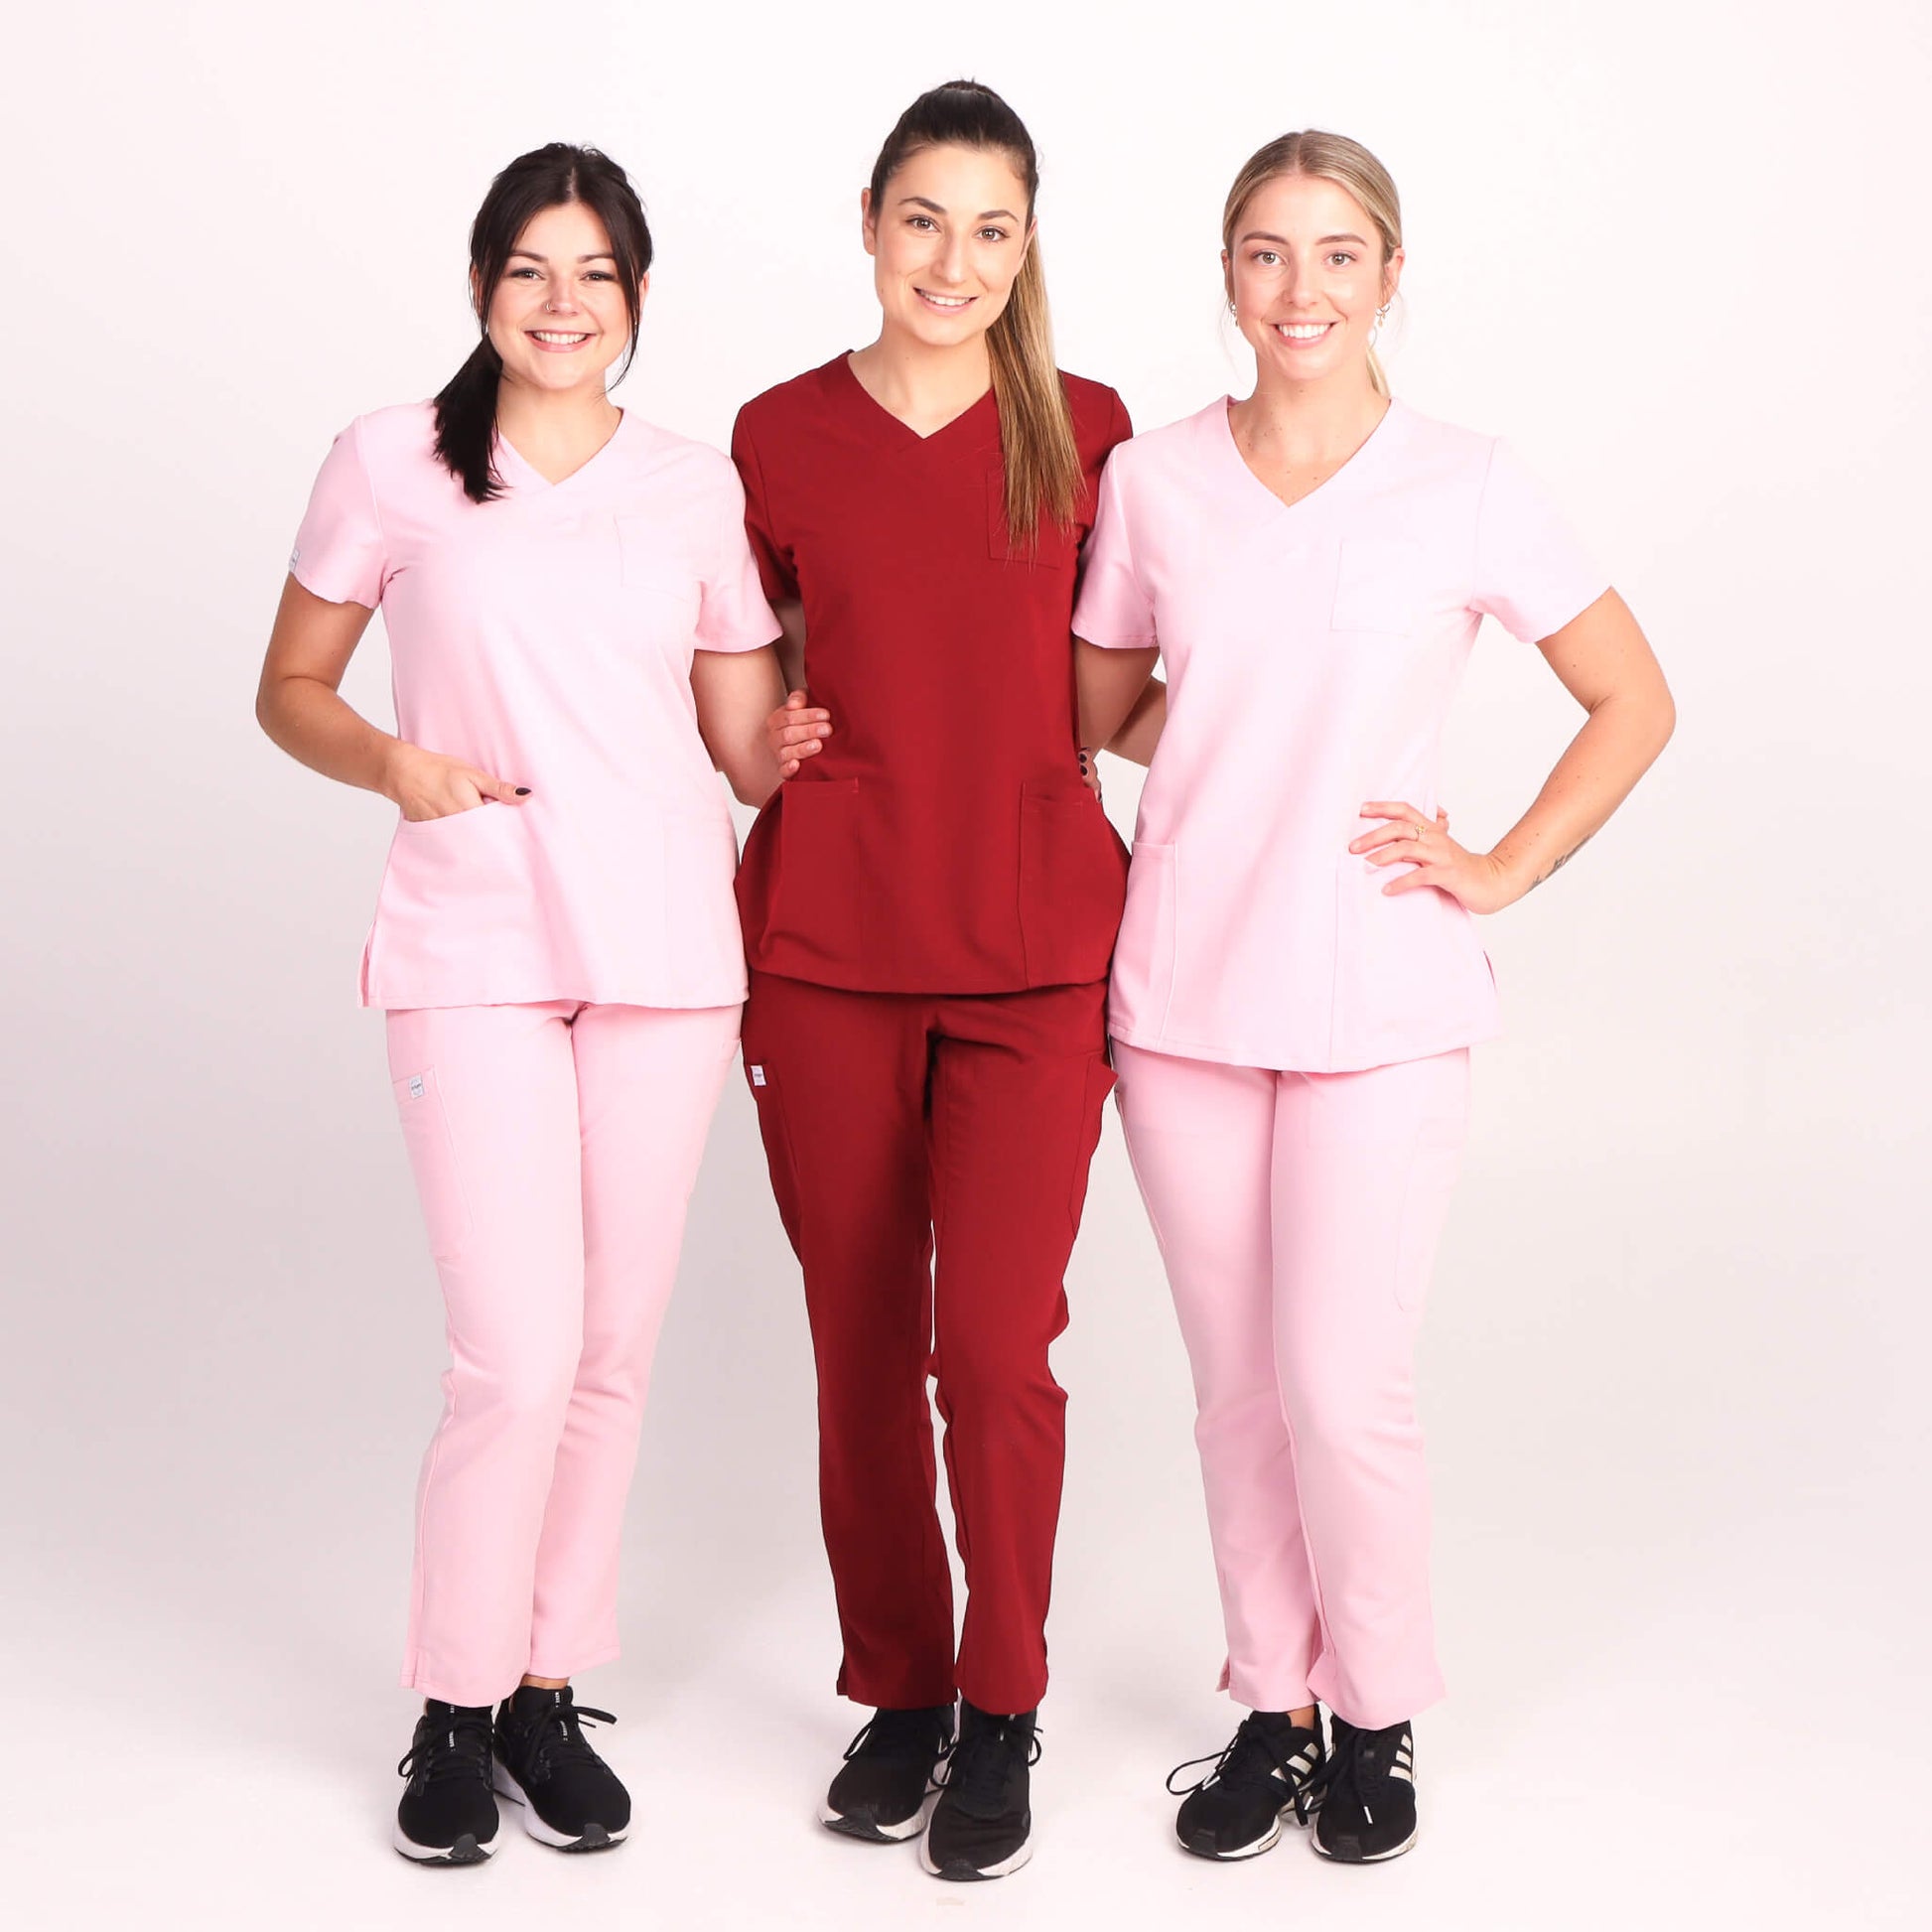 Nurse wearing Pink Medical Scrub Set from Fit Right Medical Scrubs